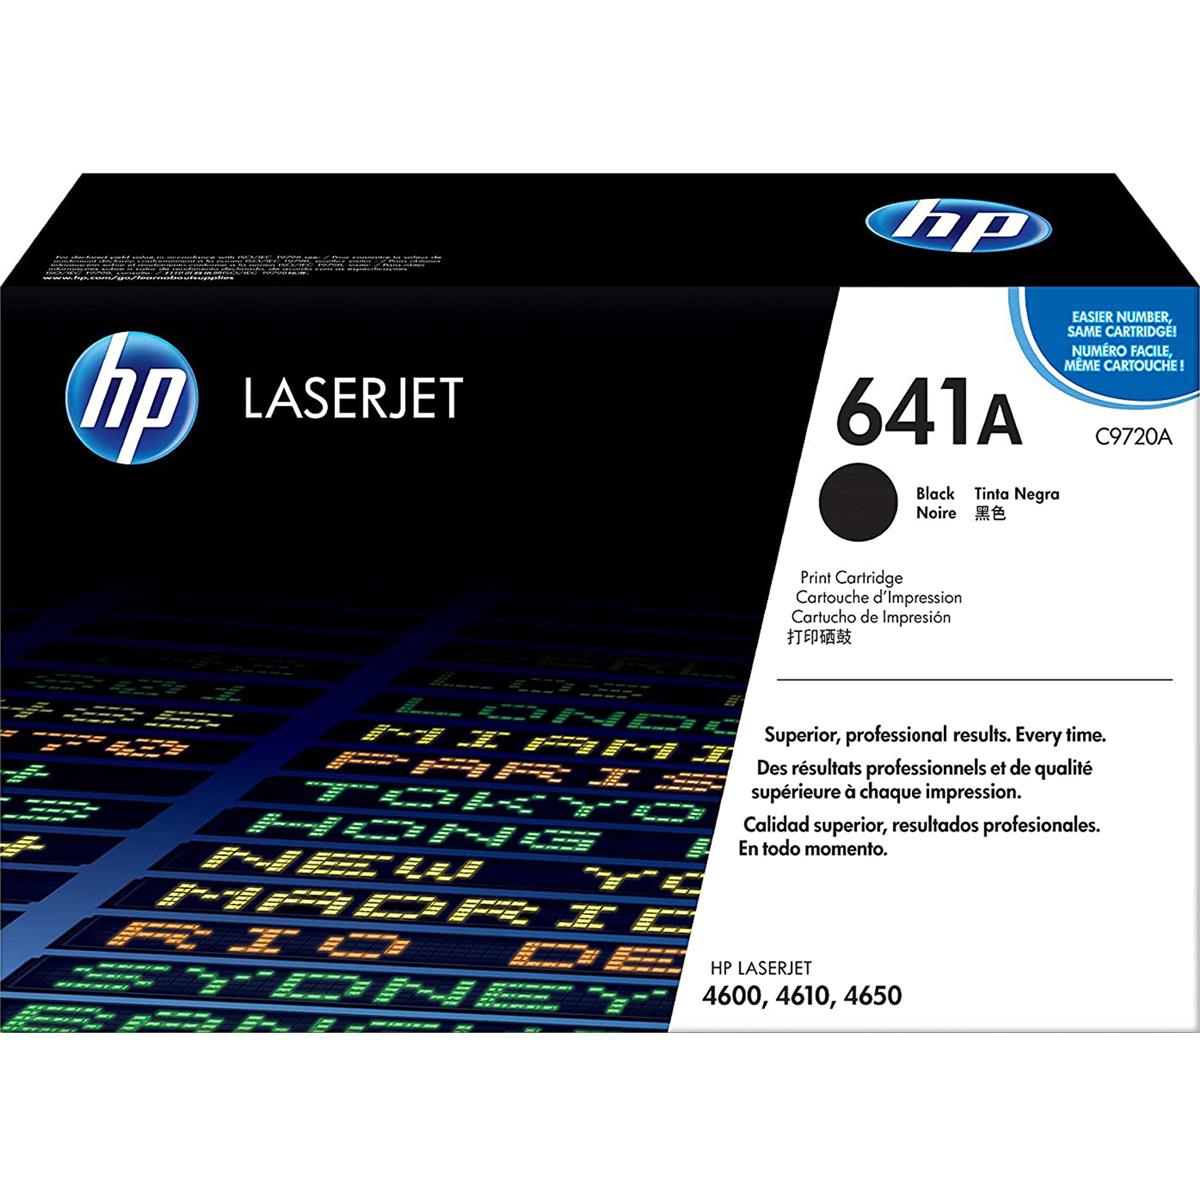 Image of HP C9720A Black Cartridge for Color LaserJet Printers